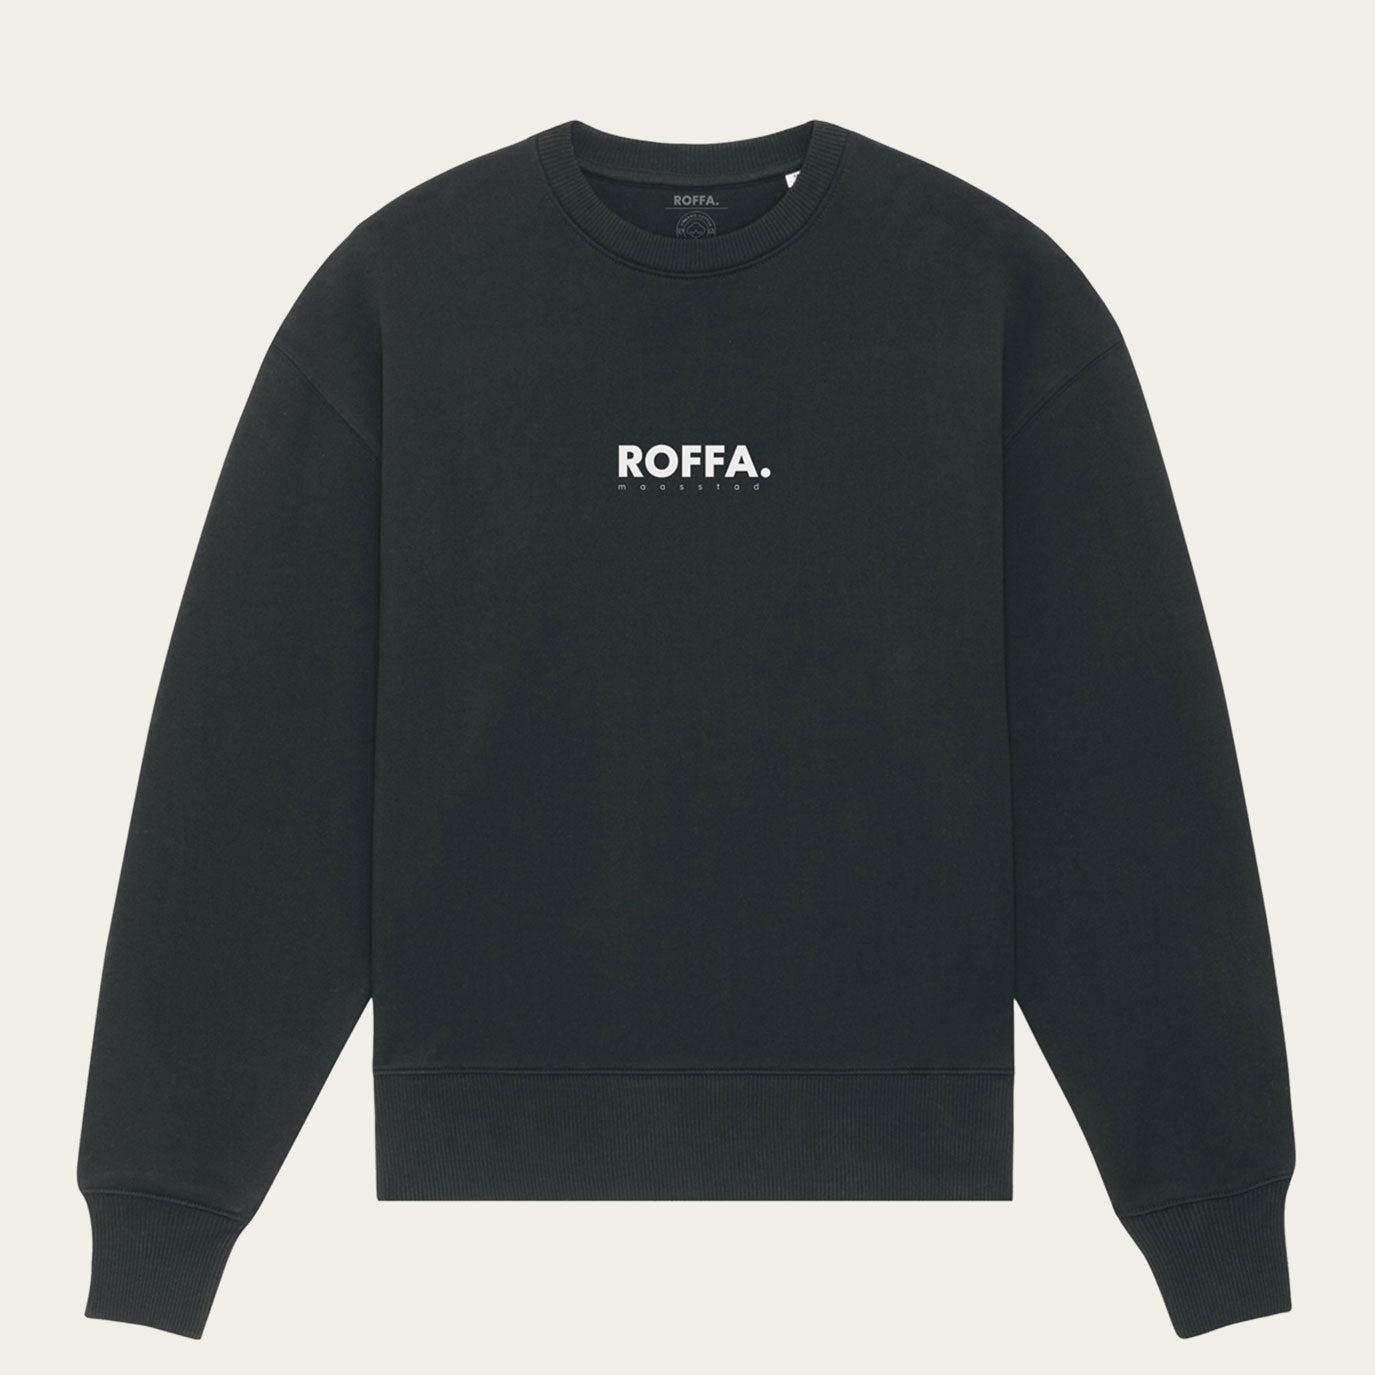 Zwarte trui met ROFFA. rotterdam opdruk